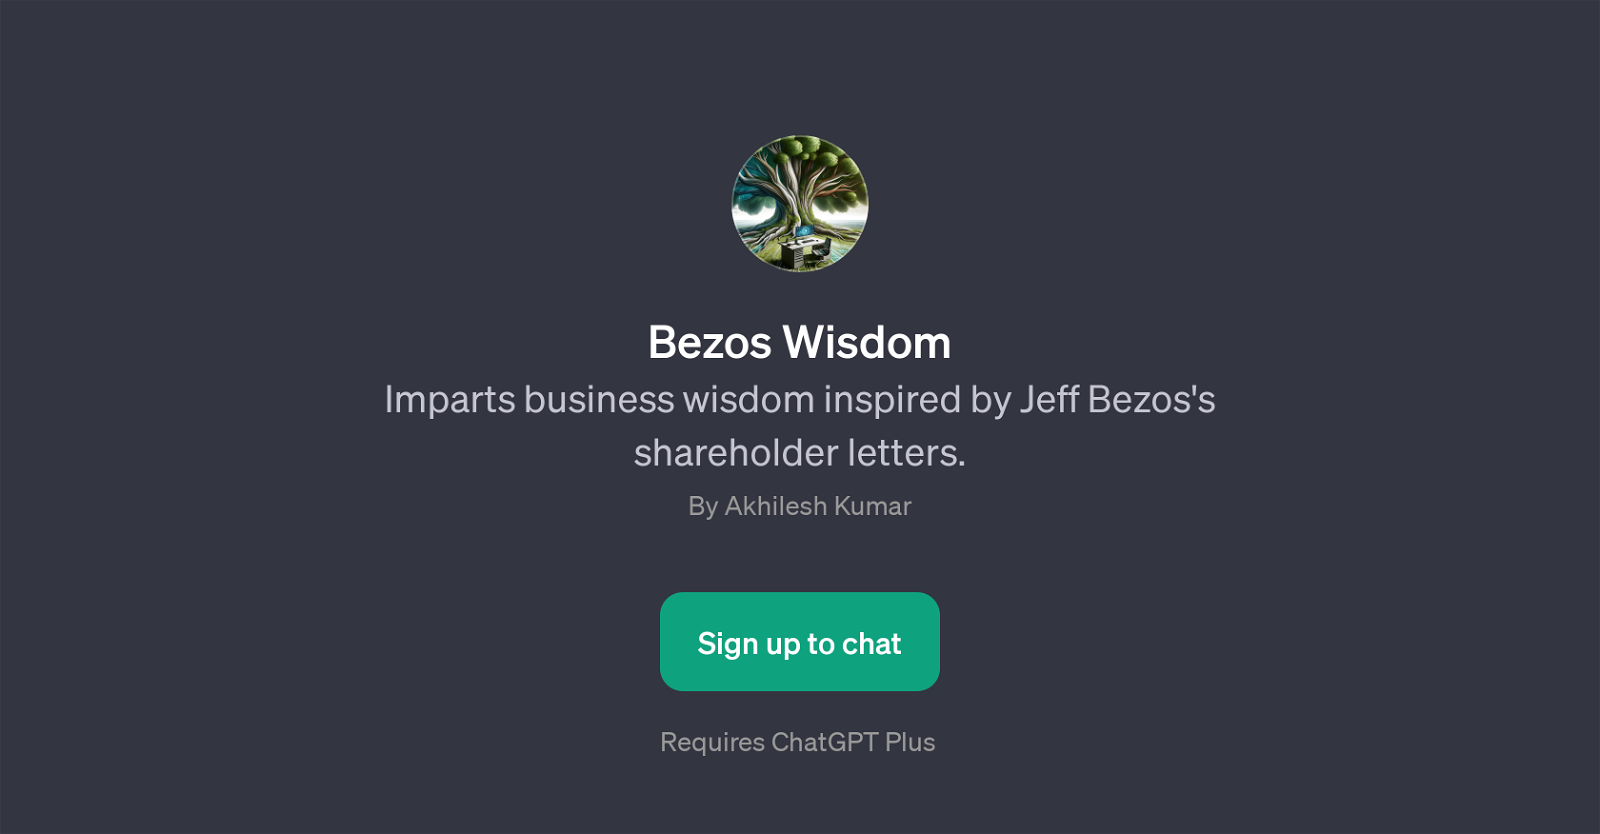 Bezos Wisdom website